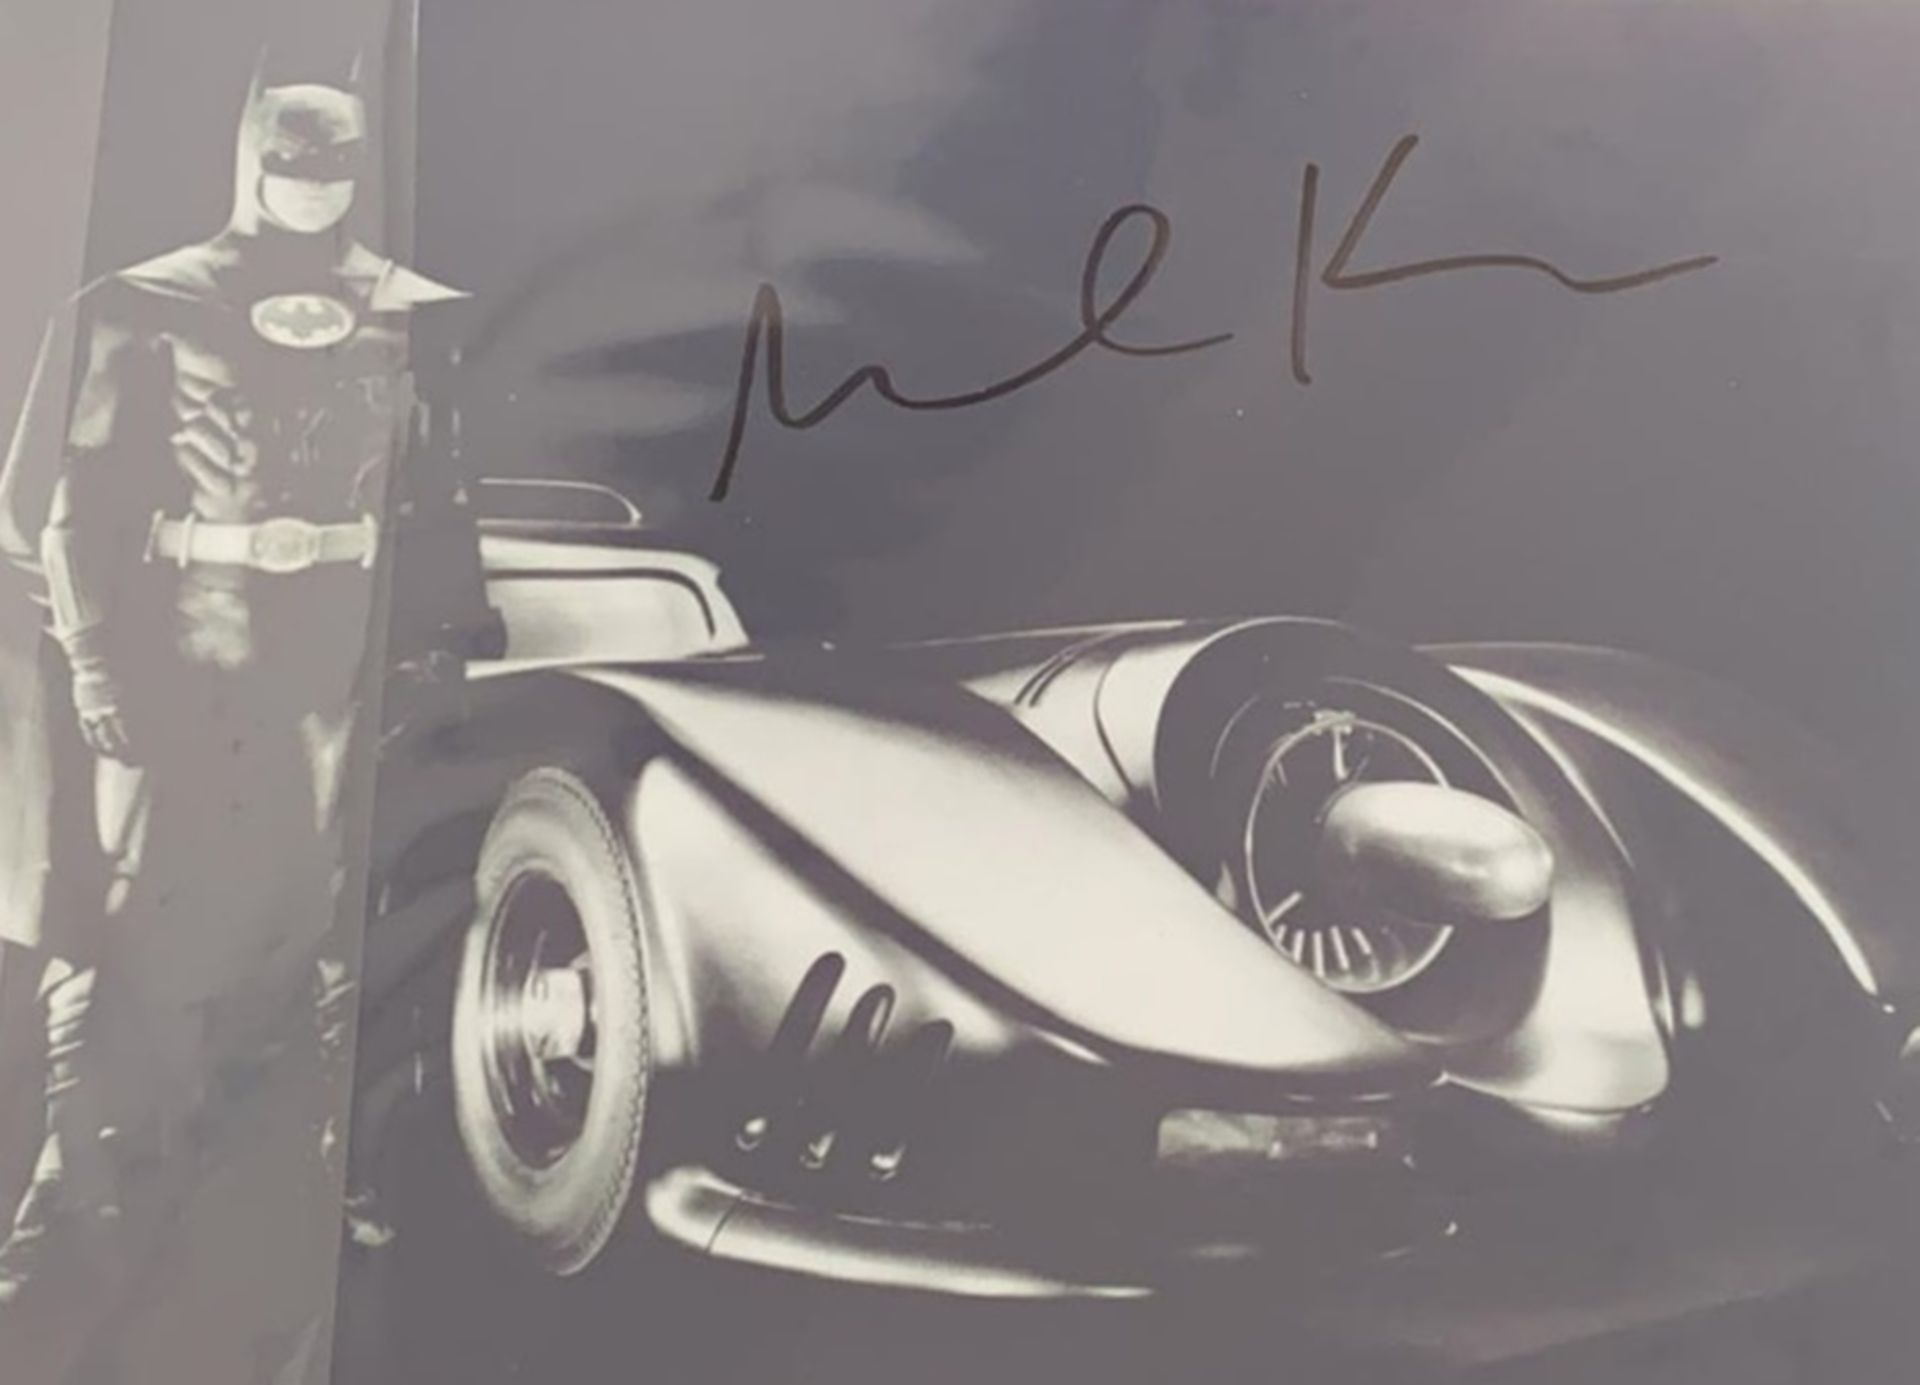 1 x Signed Autograph Picture - MICHAEL KEATON BATMAN - With COA - Size 12 x 8 Inch - NO VAT ON THE